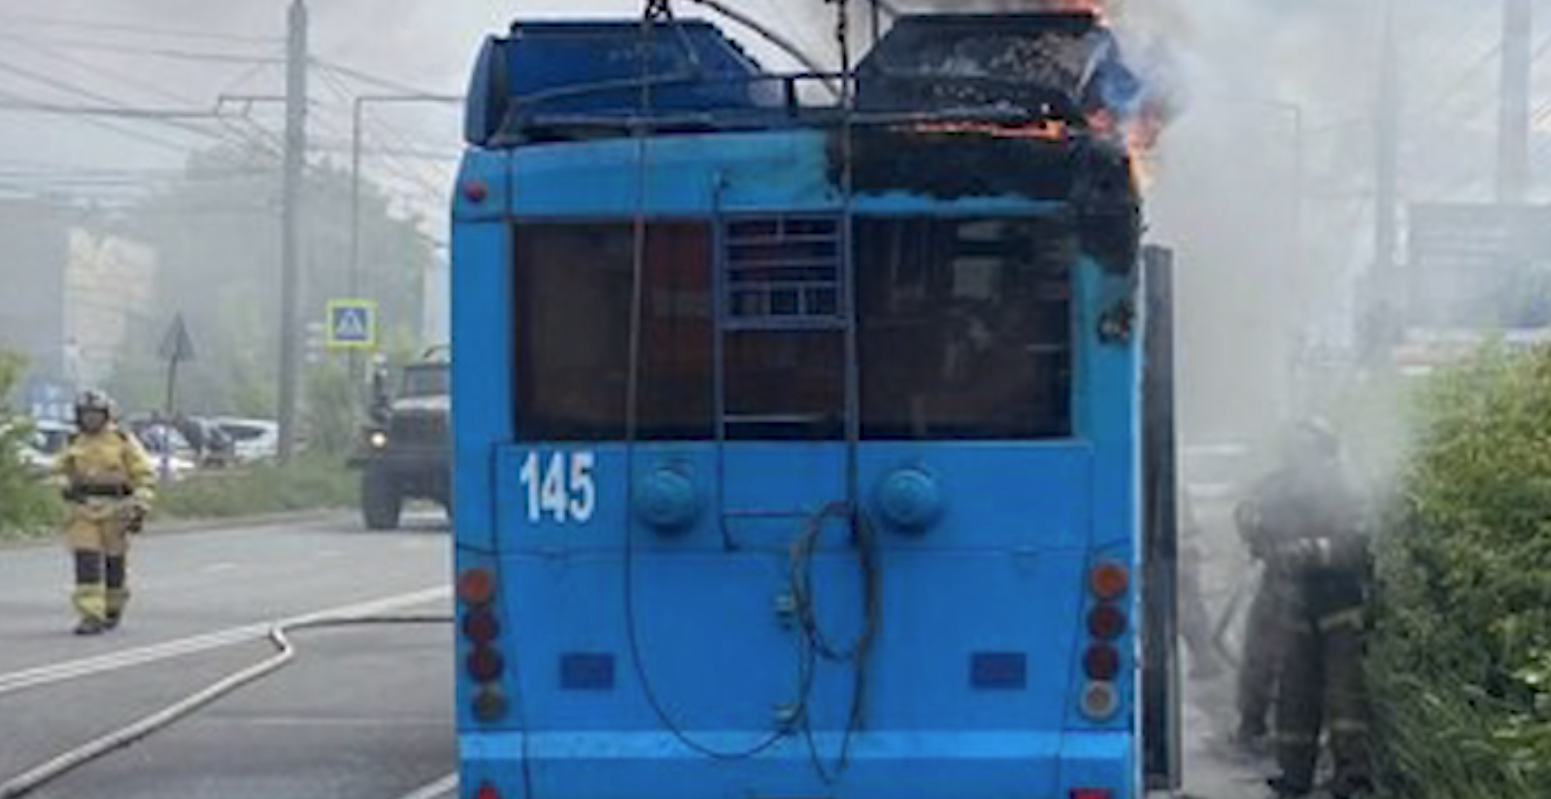   В Миассе на ходу загорелся троллейбус